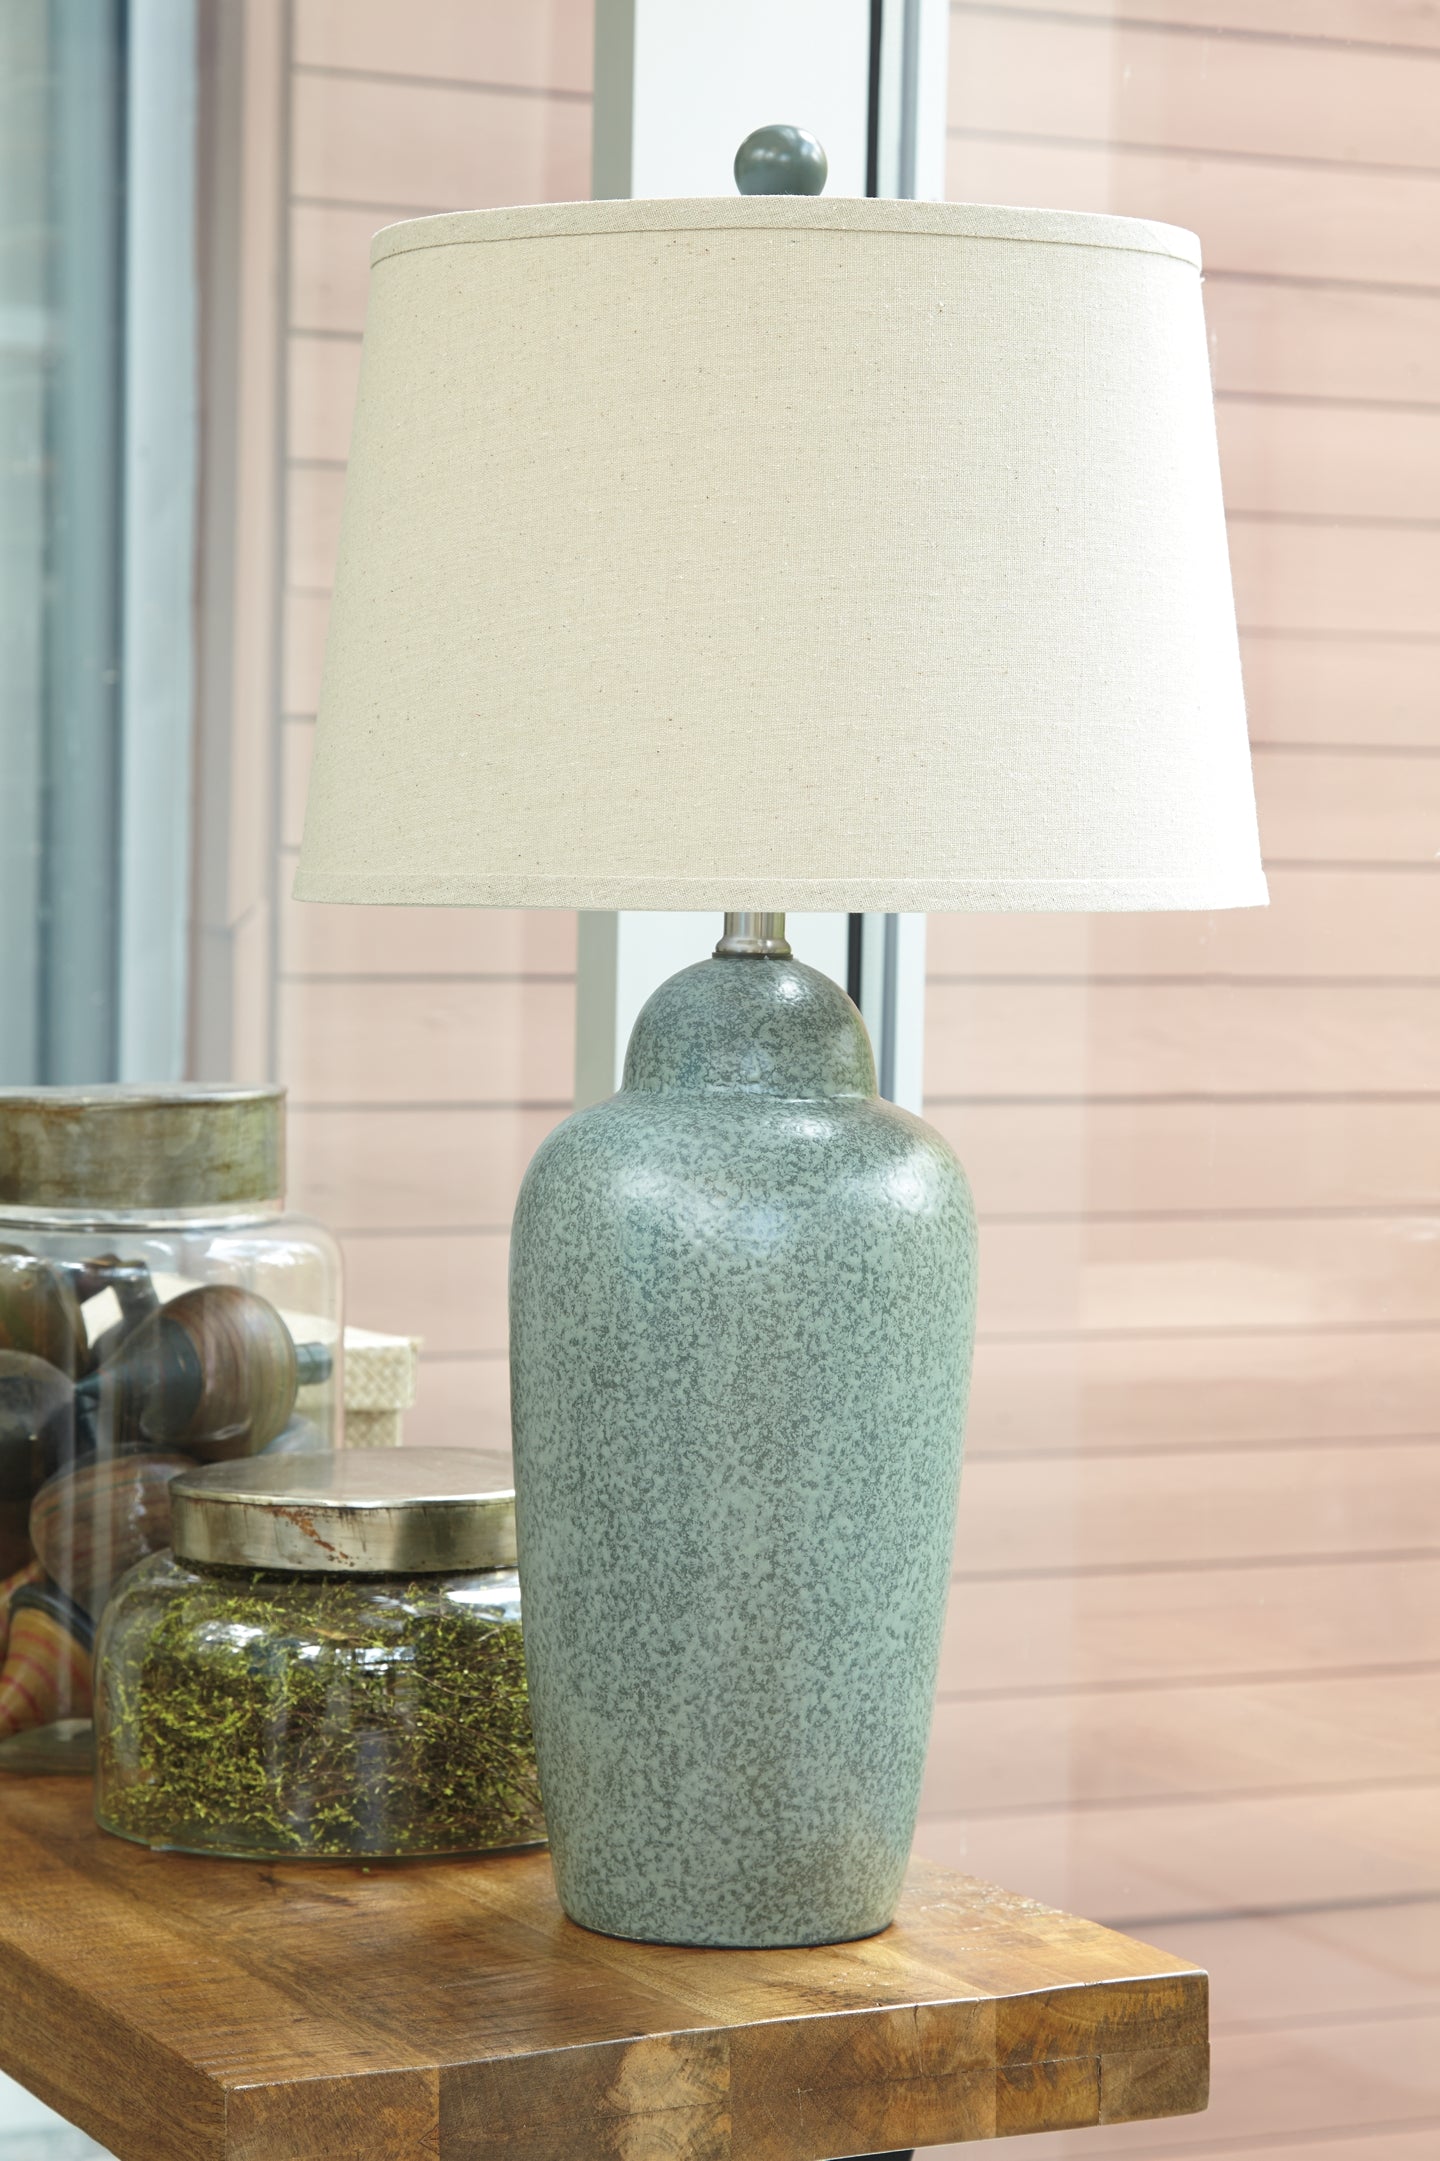 Saher Ceramic Table Lamp (1/CN)